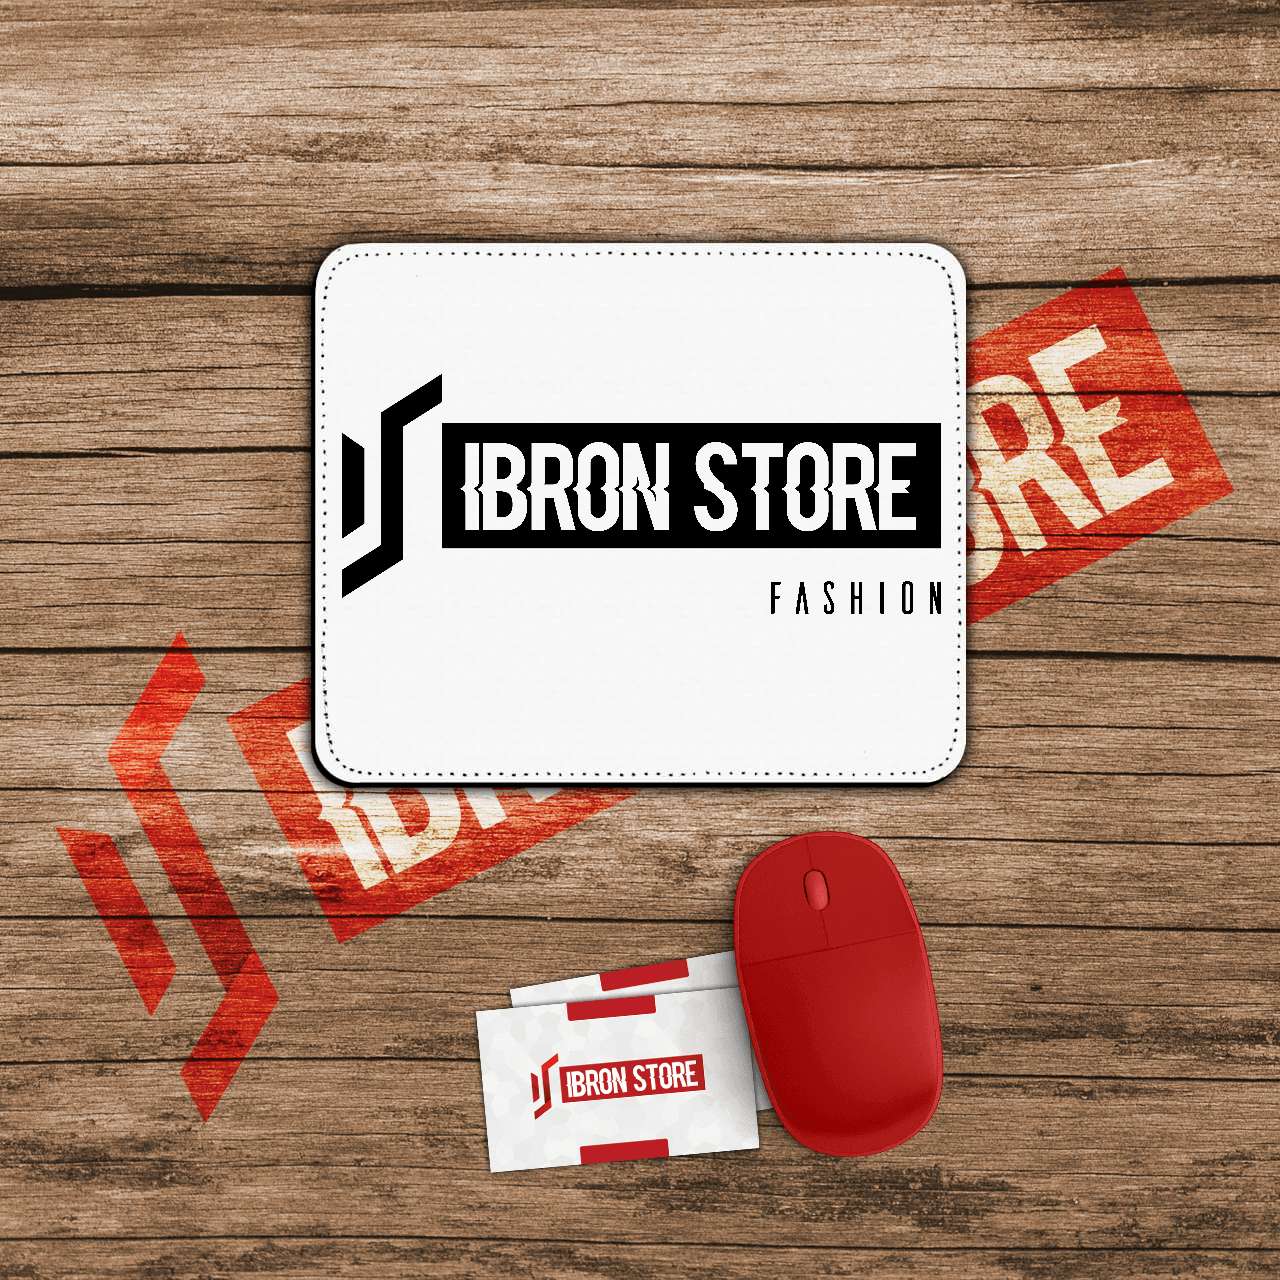 IbronStore Fashion (fekete) mintás prémium egérpad (6mm vastag)